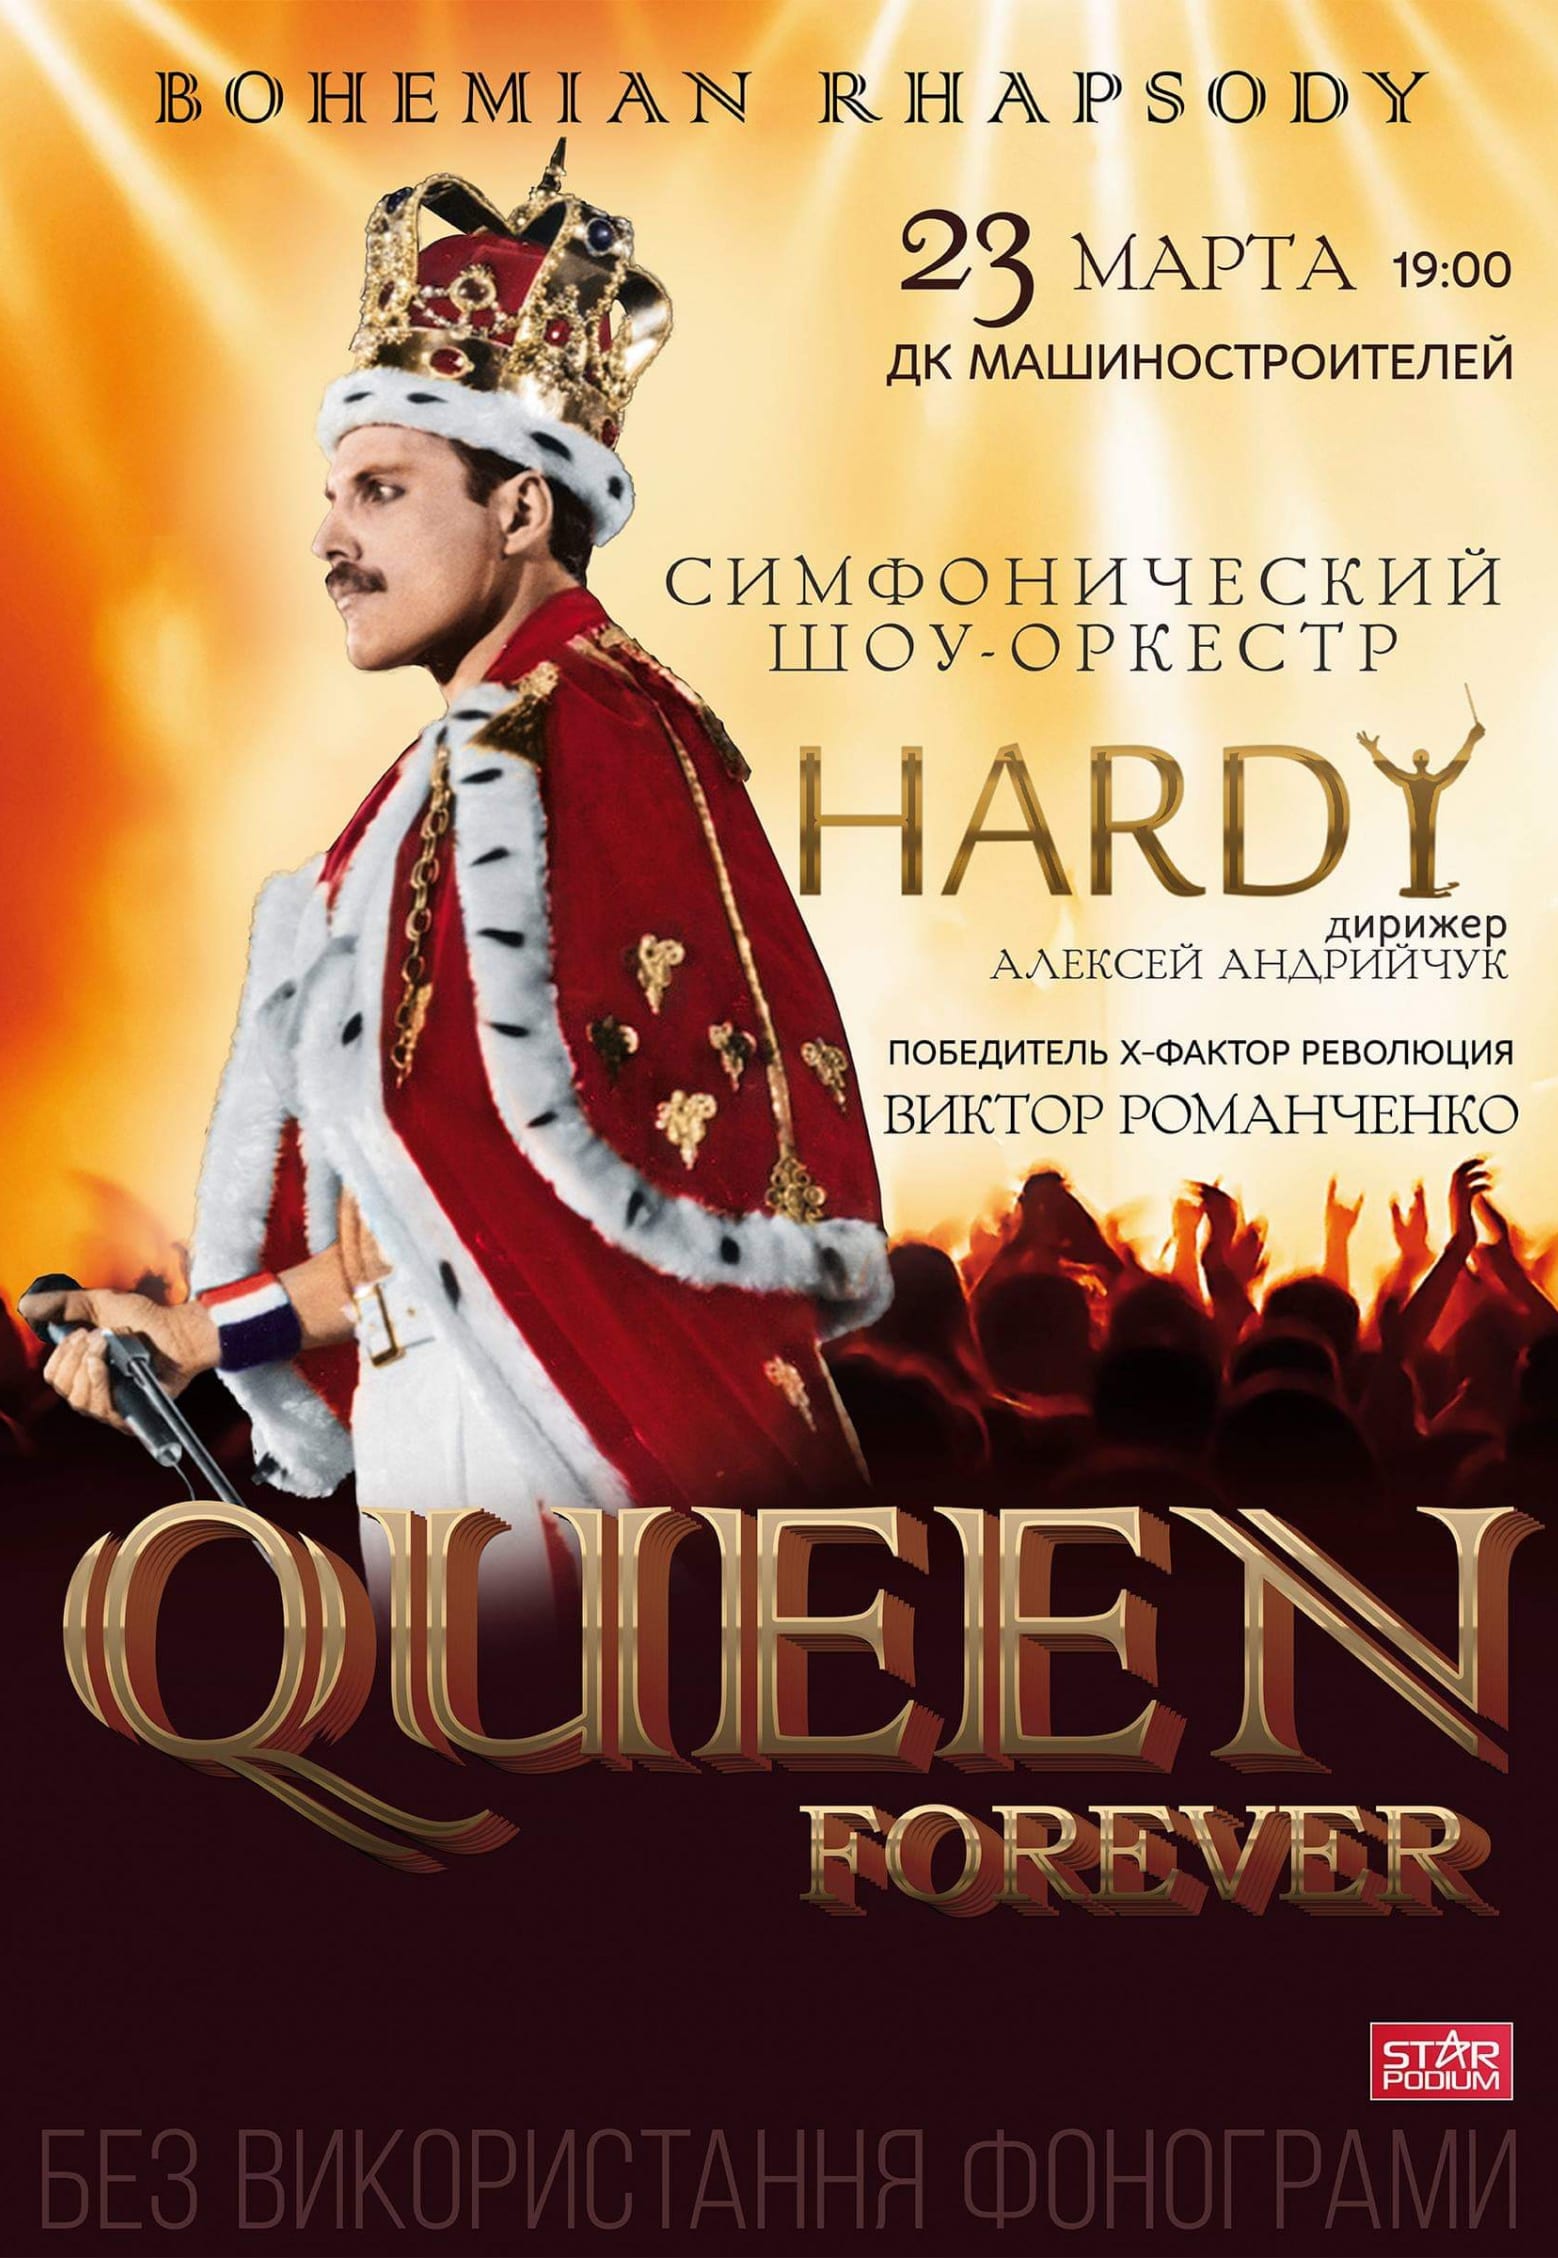 Queen Forever Hardy Orchestrа Днепр, купить билеты. Афиша Днепра